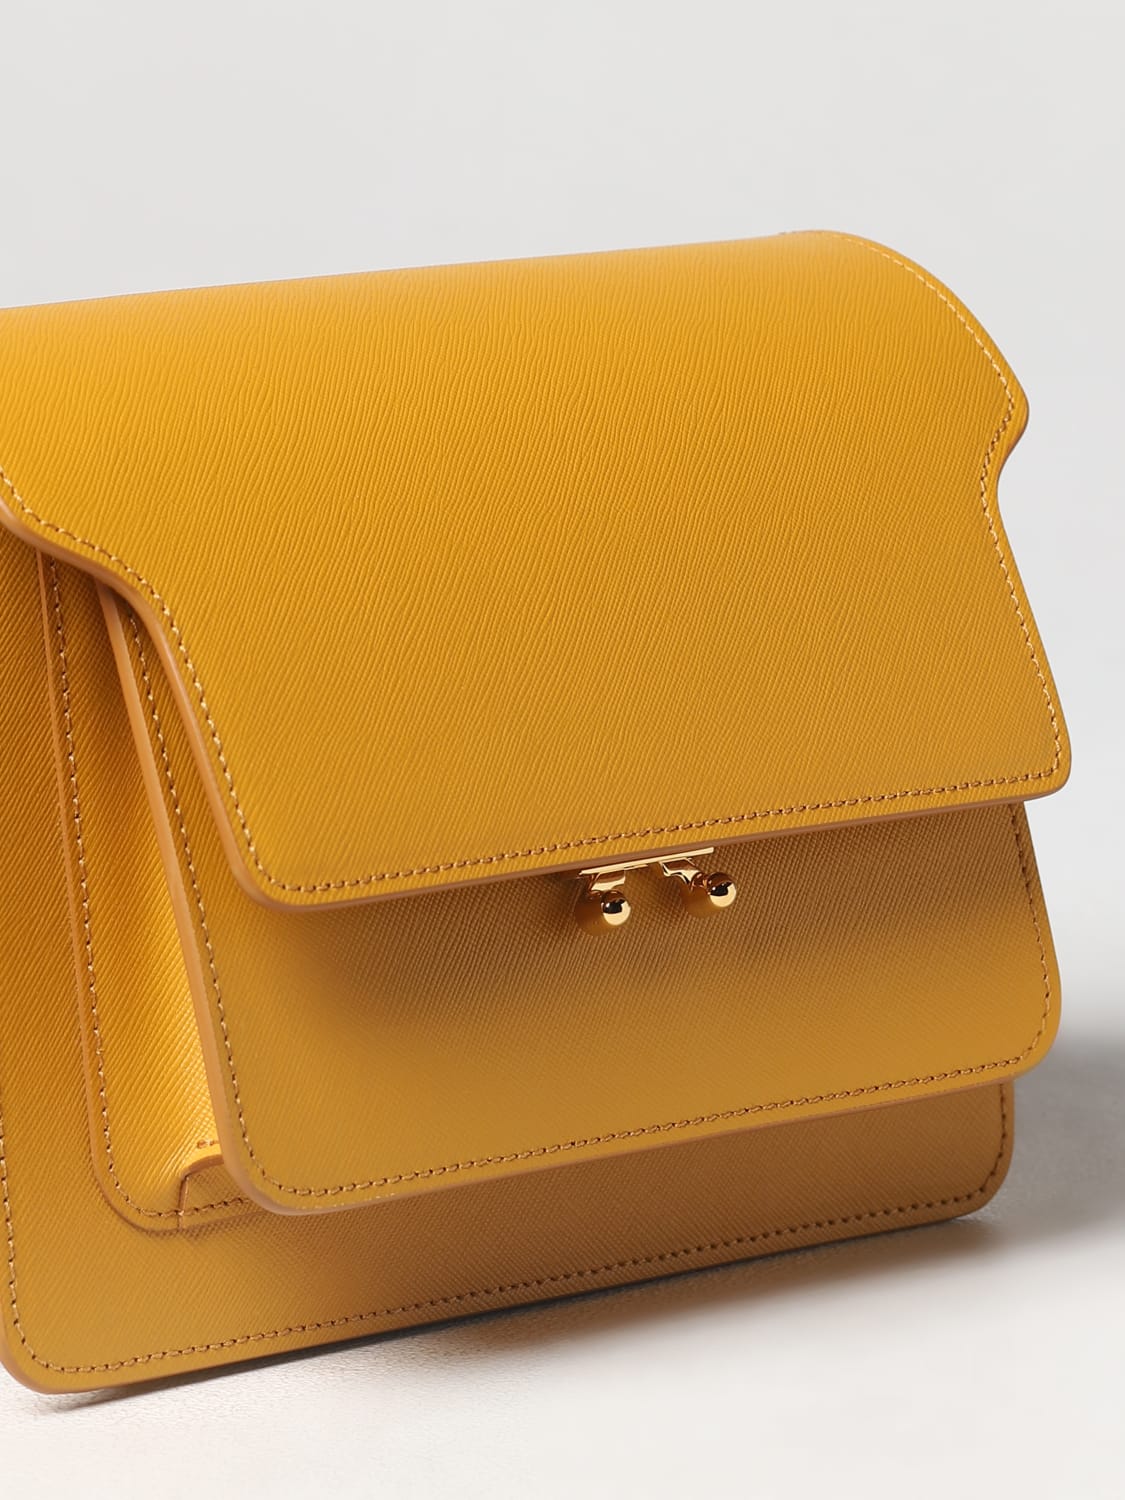 Marni Trunk Mini Leather Shoulder Bag in Yellow